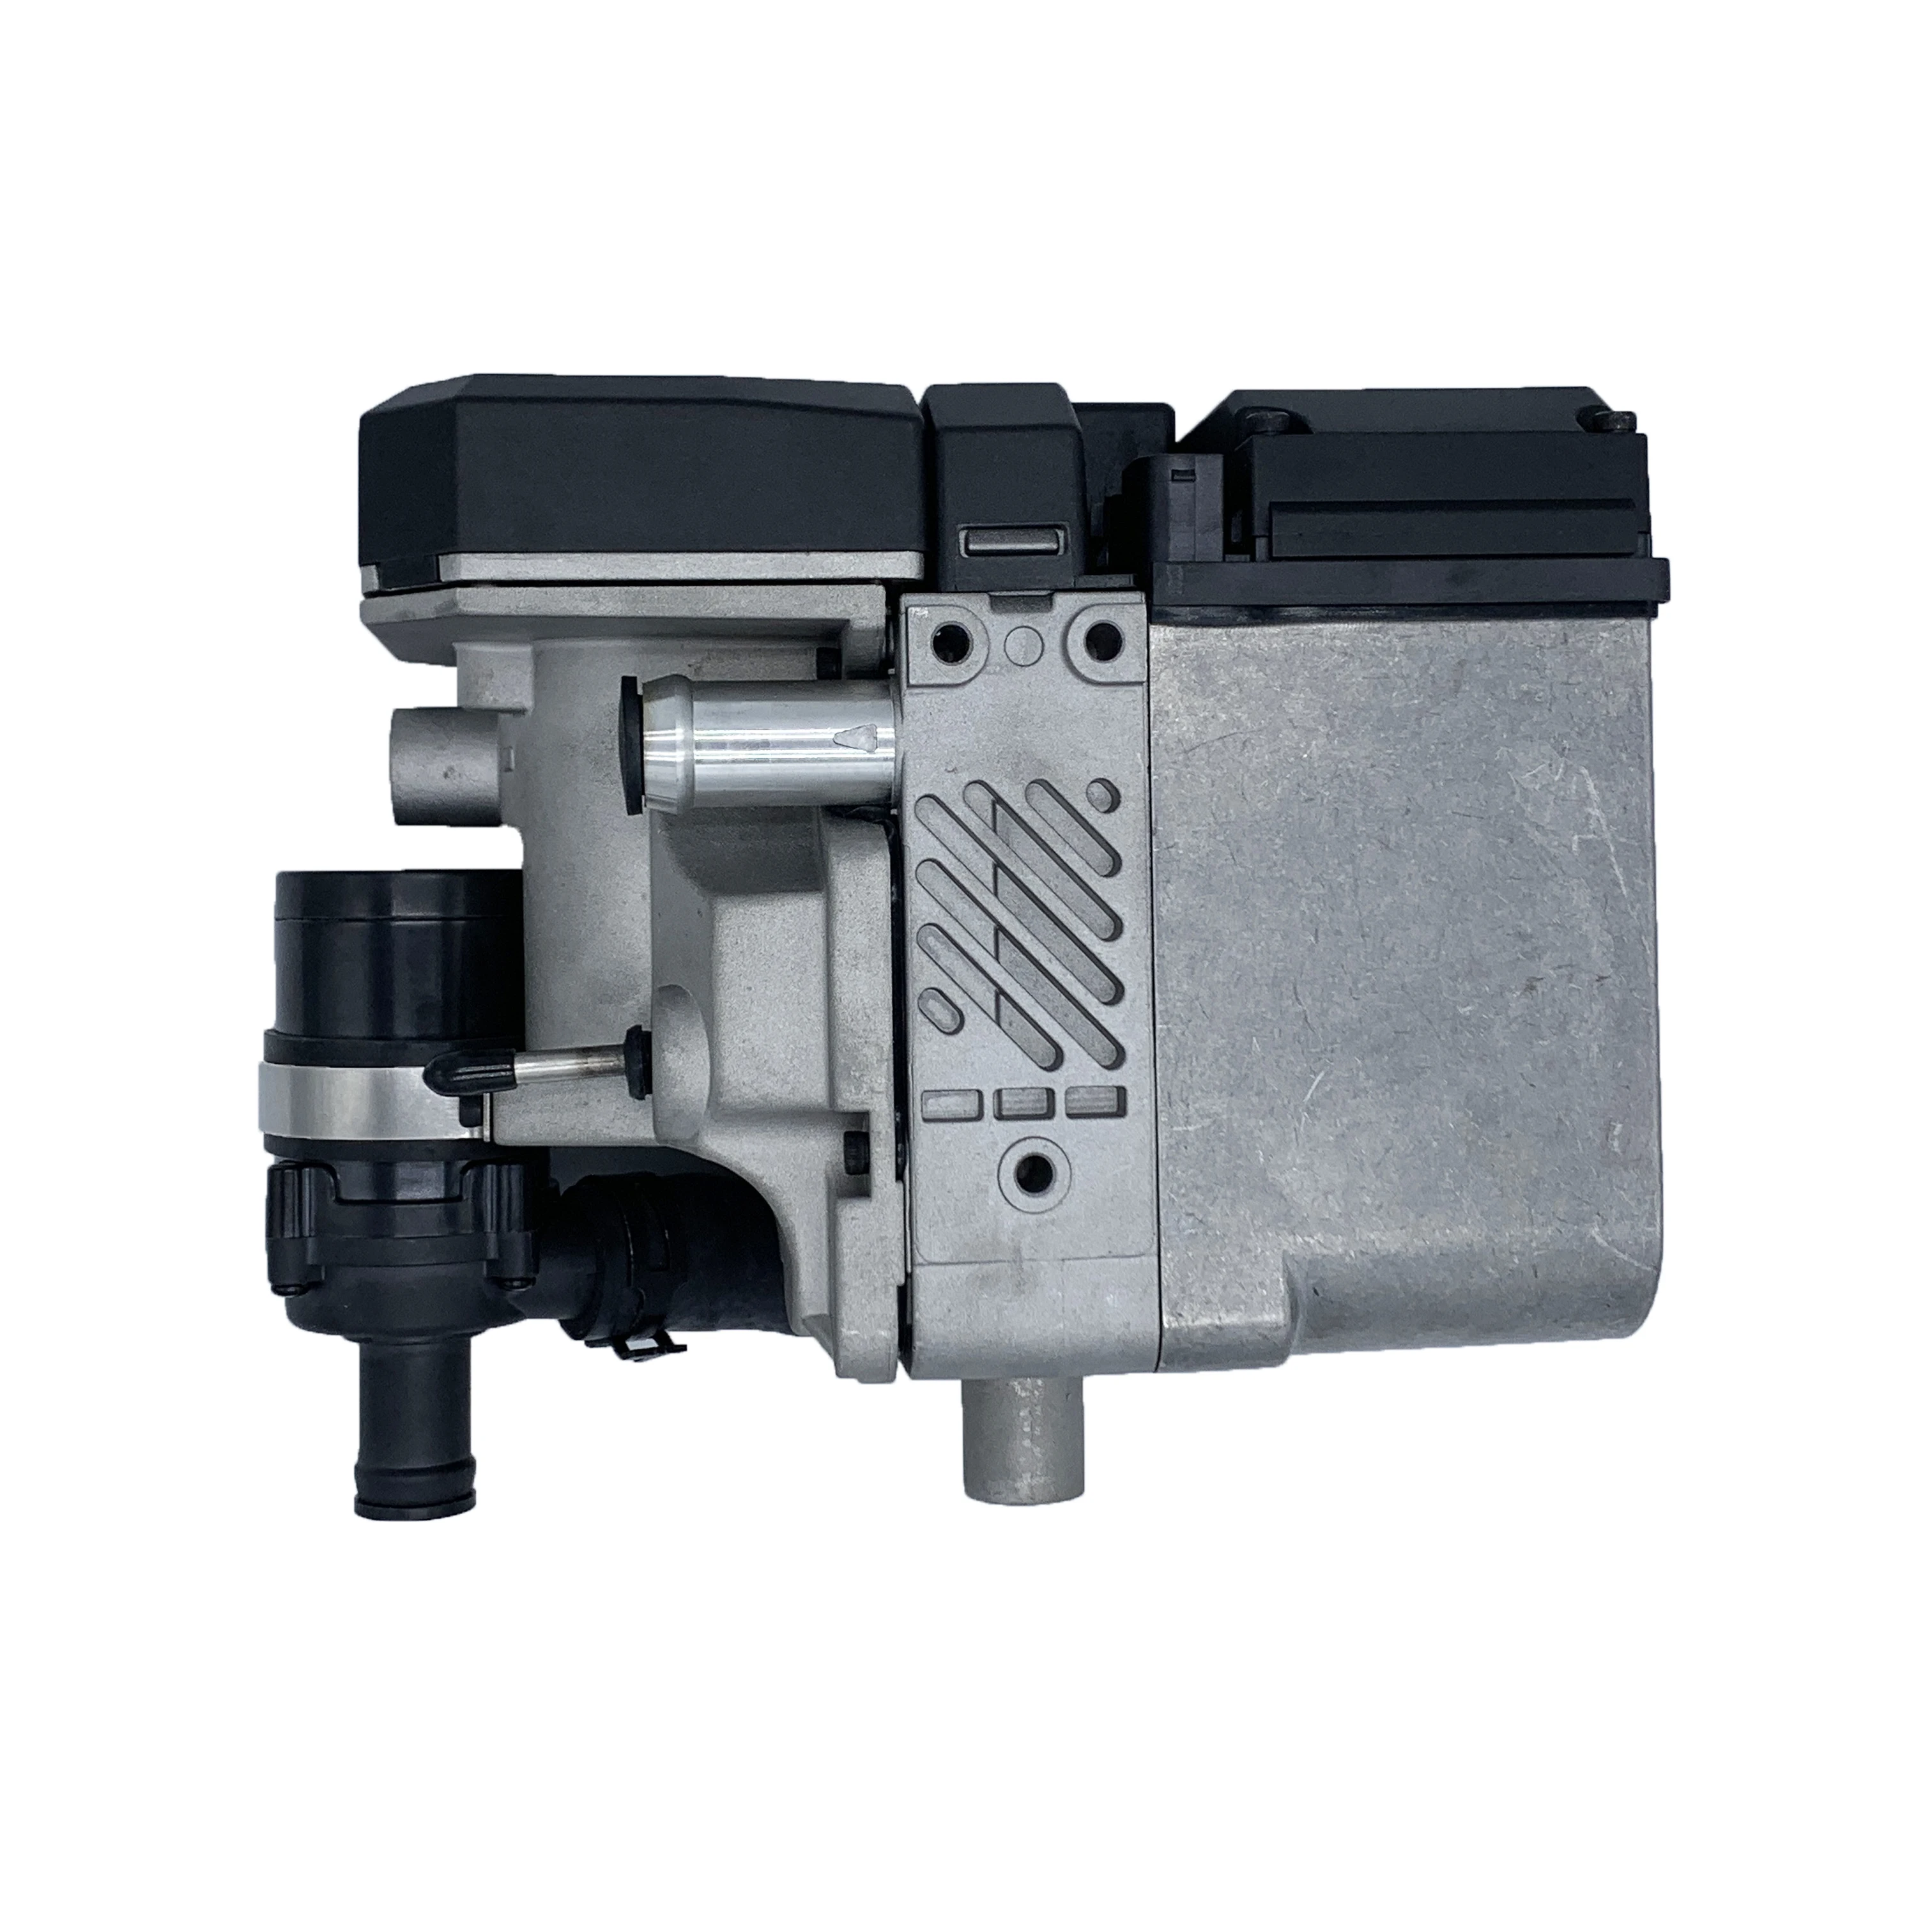 

High Configuration 5kw 12V Water Coolant Liquid Parking Heater Similar to Webasto Heater